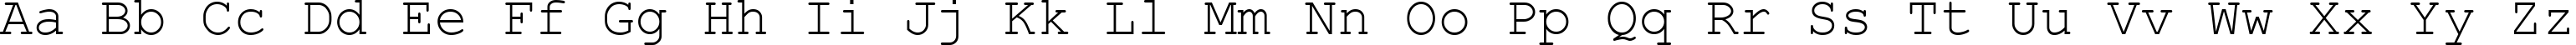 Пример написания английского алфавита шрифтом Courier New CE